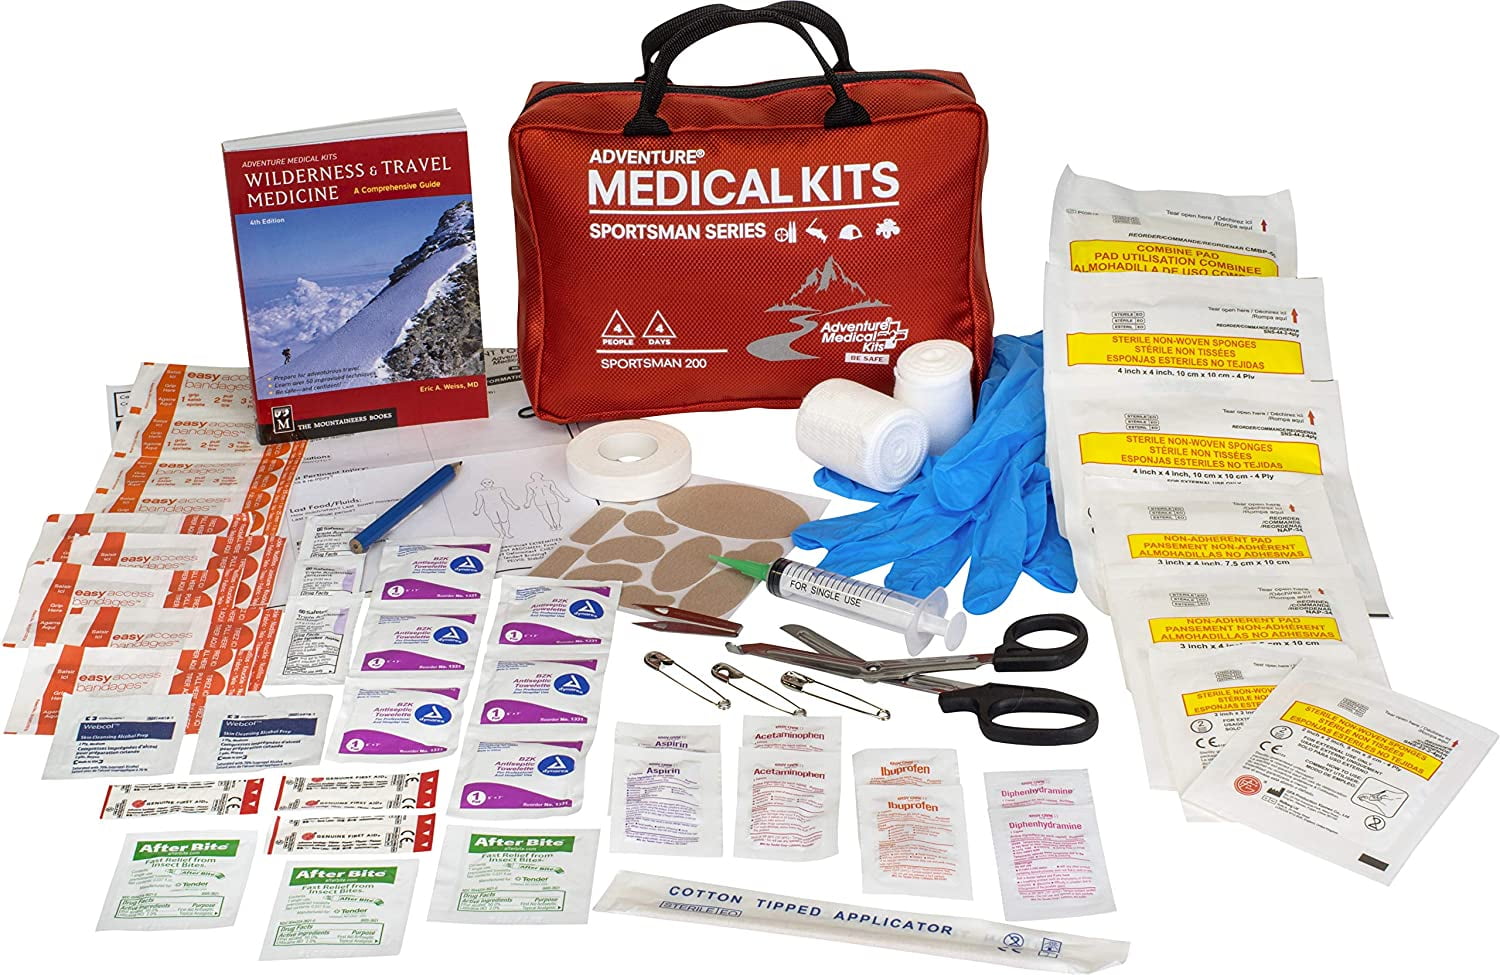 SPORTSMAN Series Medical Kit - 200